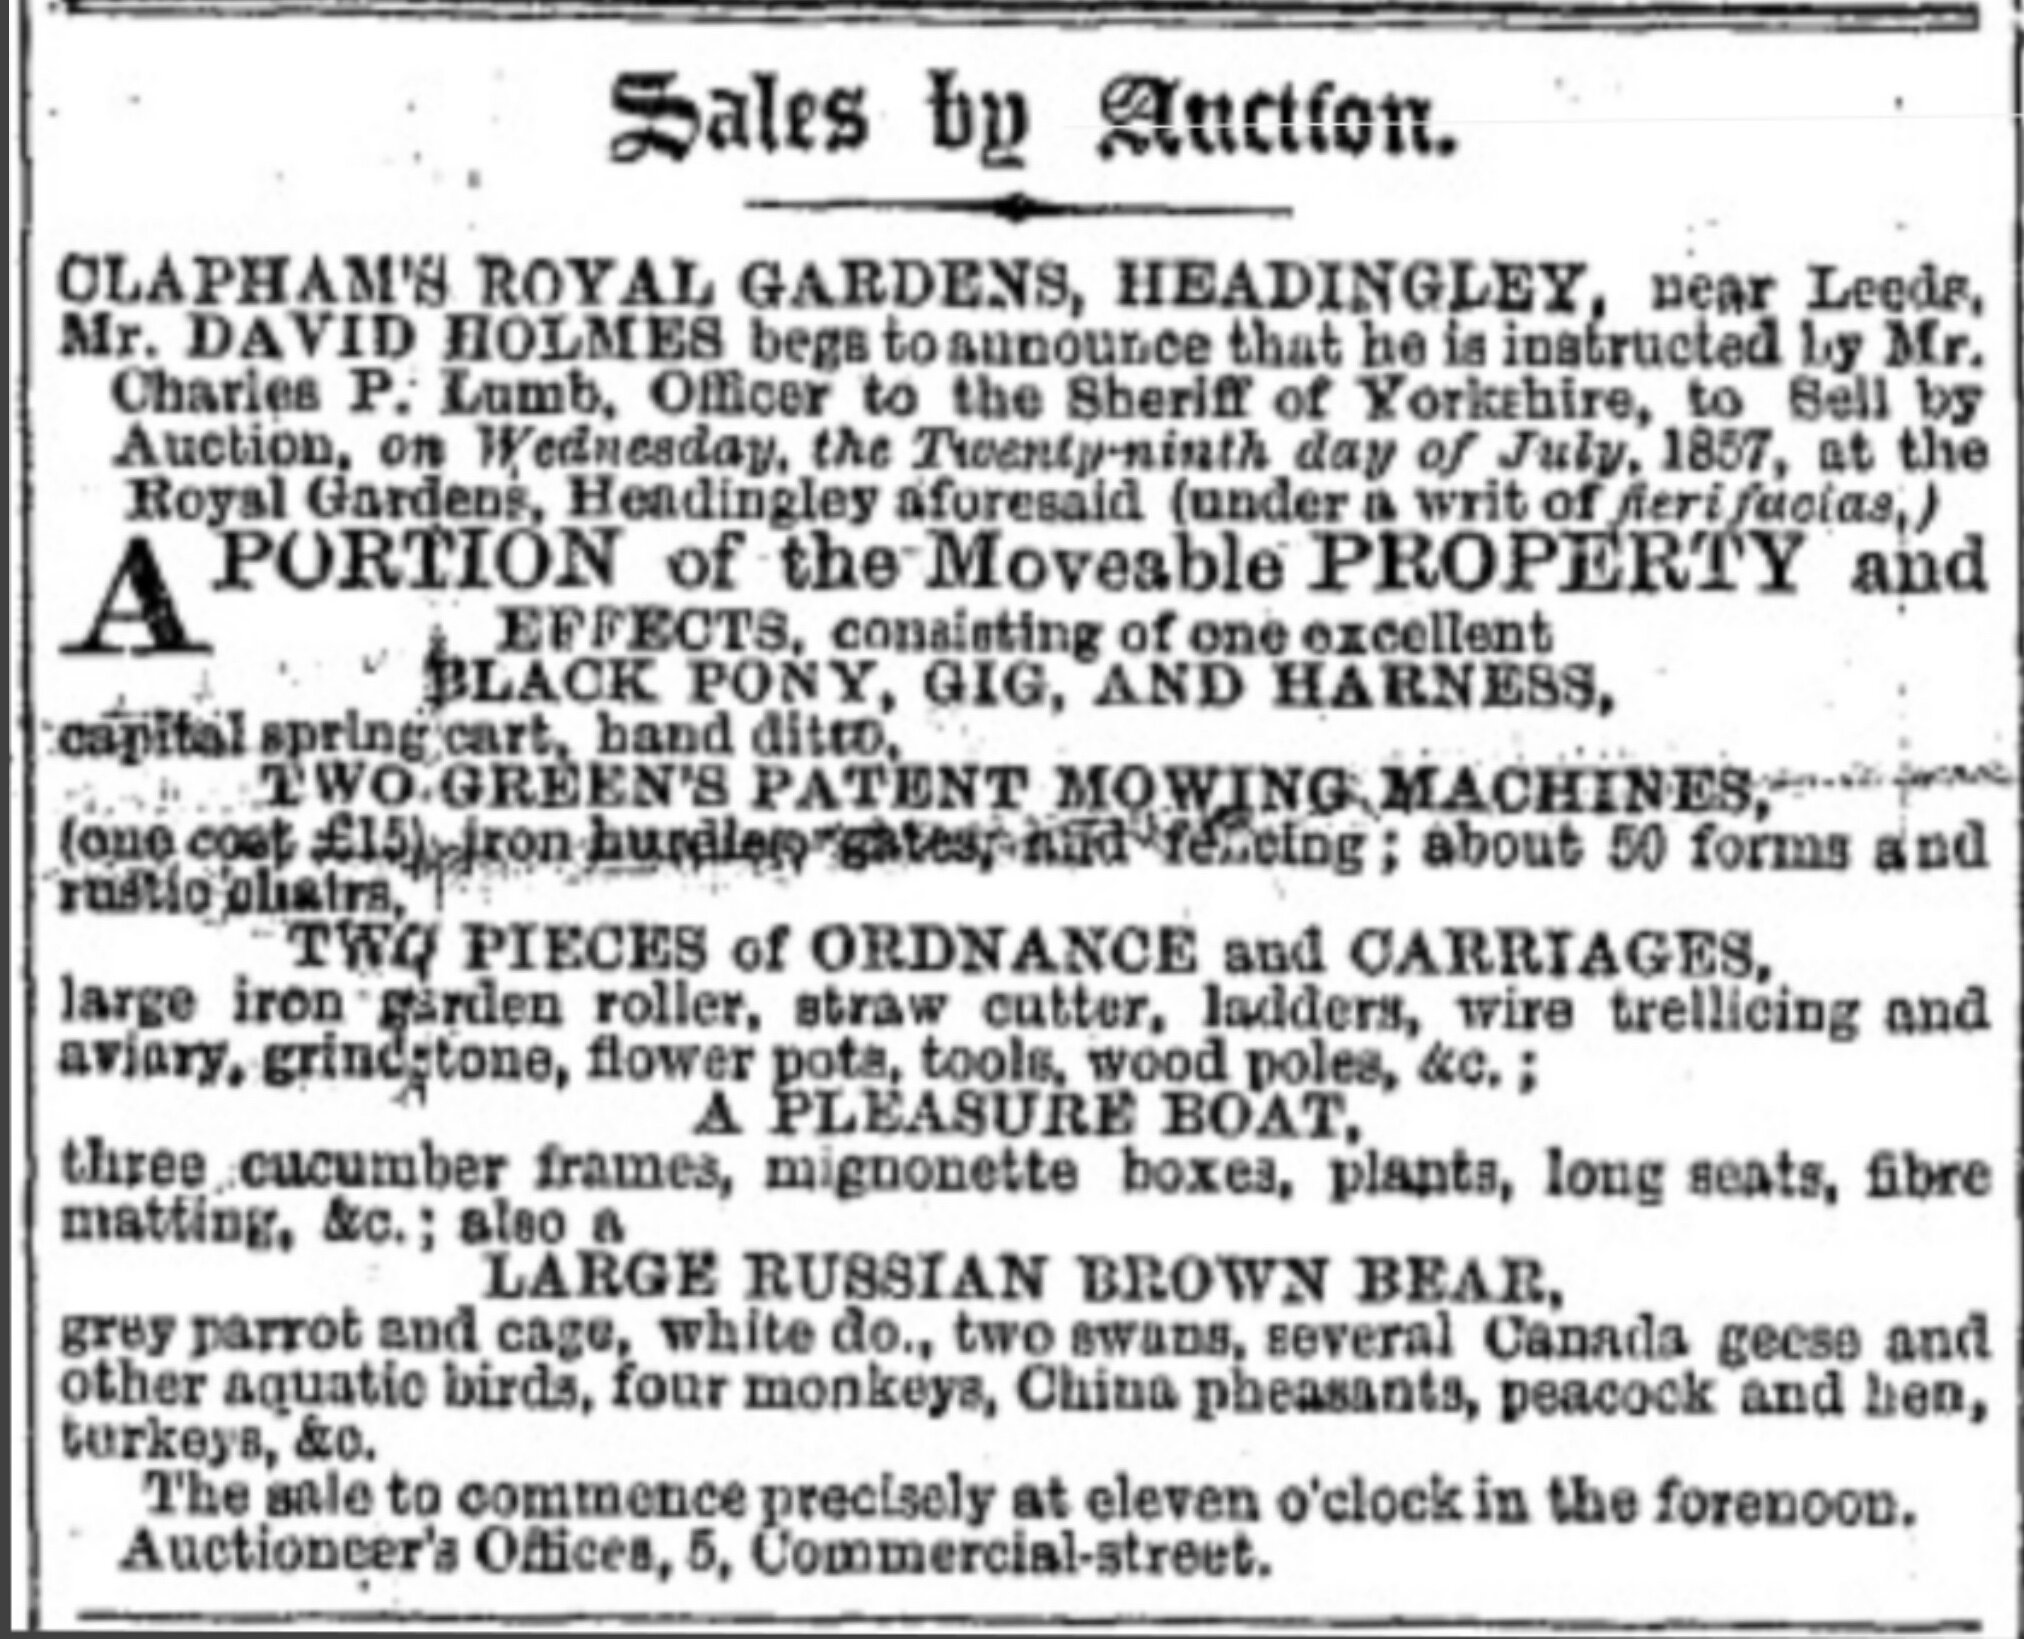 Leeds Royal Gardens, Sale, 29 July 1857